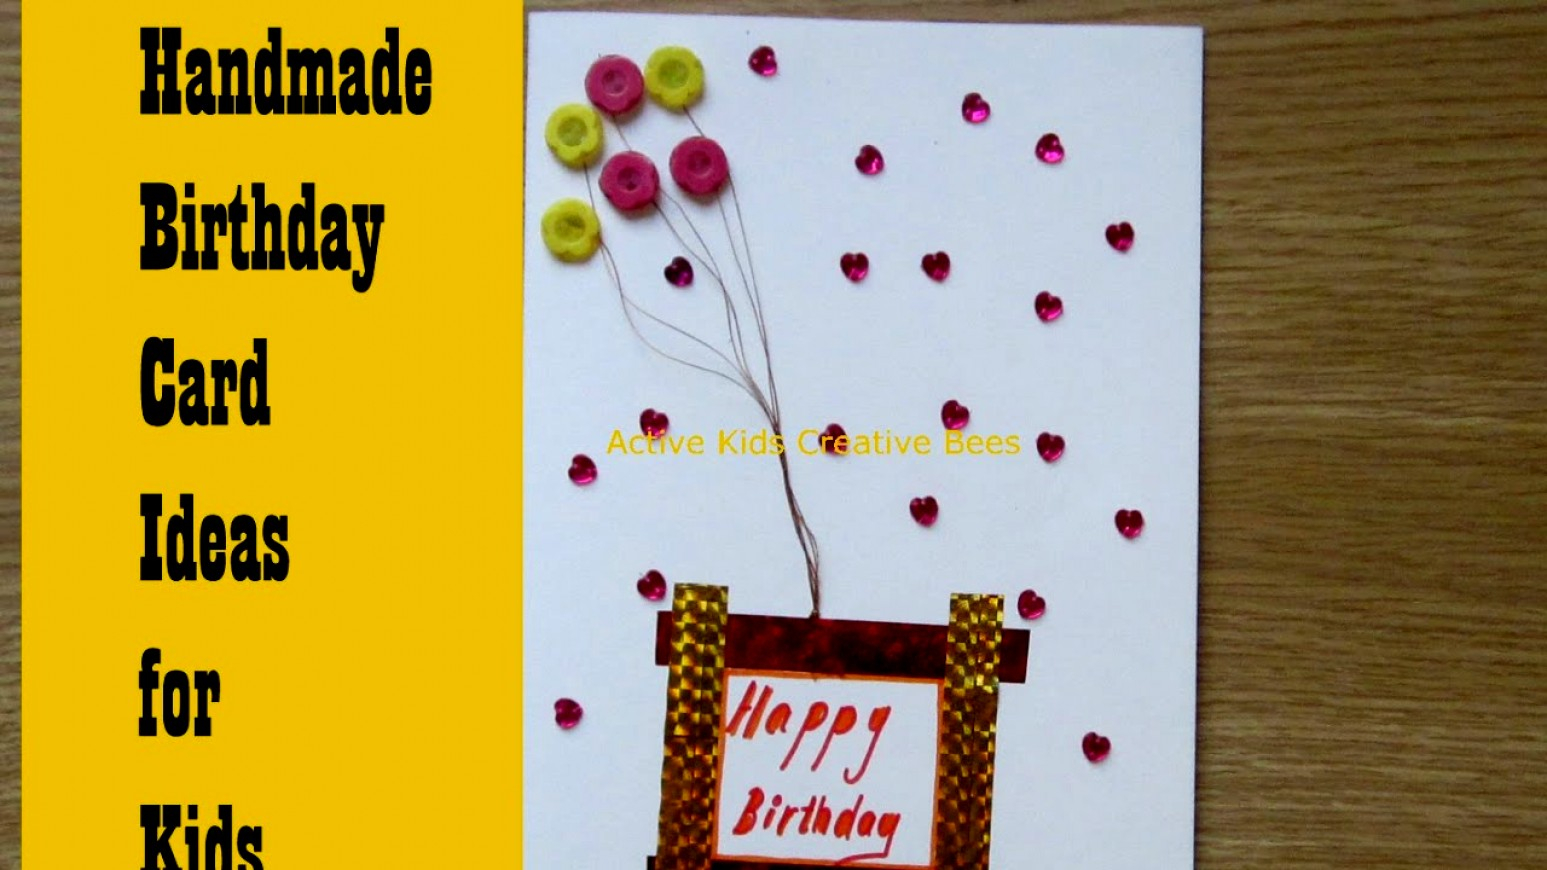 Creative Ideas For Handmade Birthday Cards Awesome Of Handmade Birthday Card Ideas For Kids Homemade Cards To